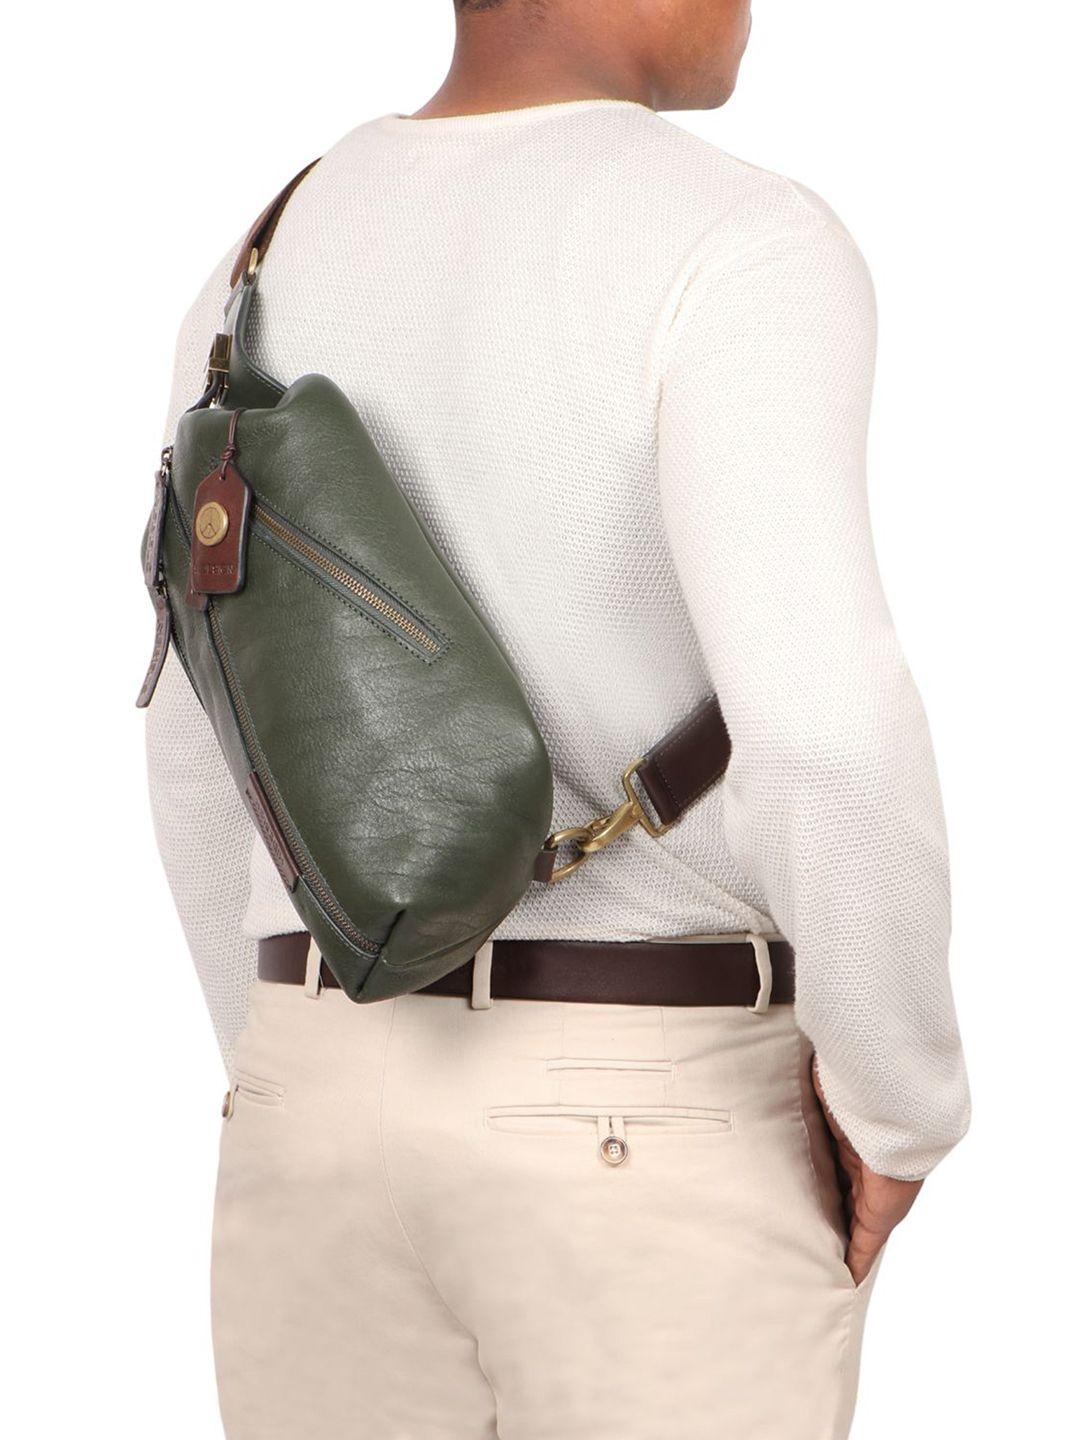 hidesign men leather crossbody backpack